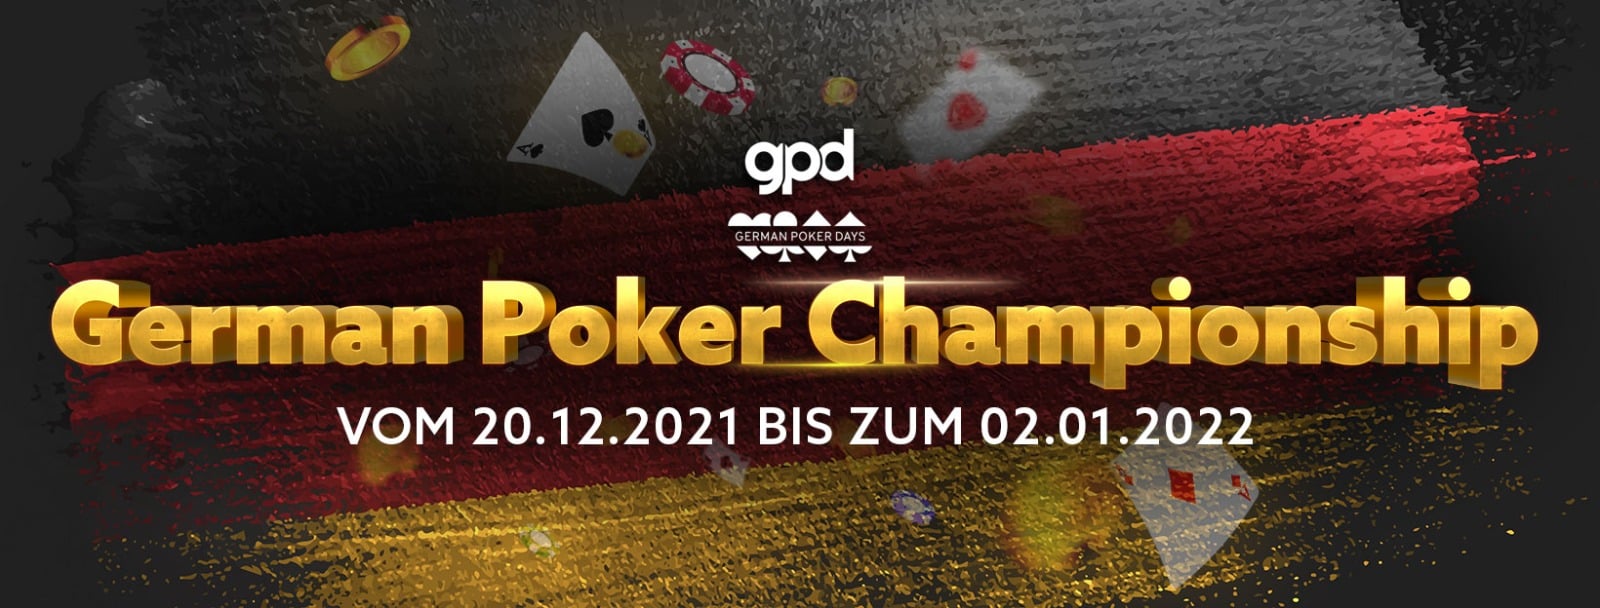 German Poker Championship – Starttag 7